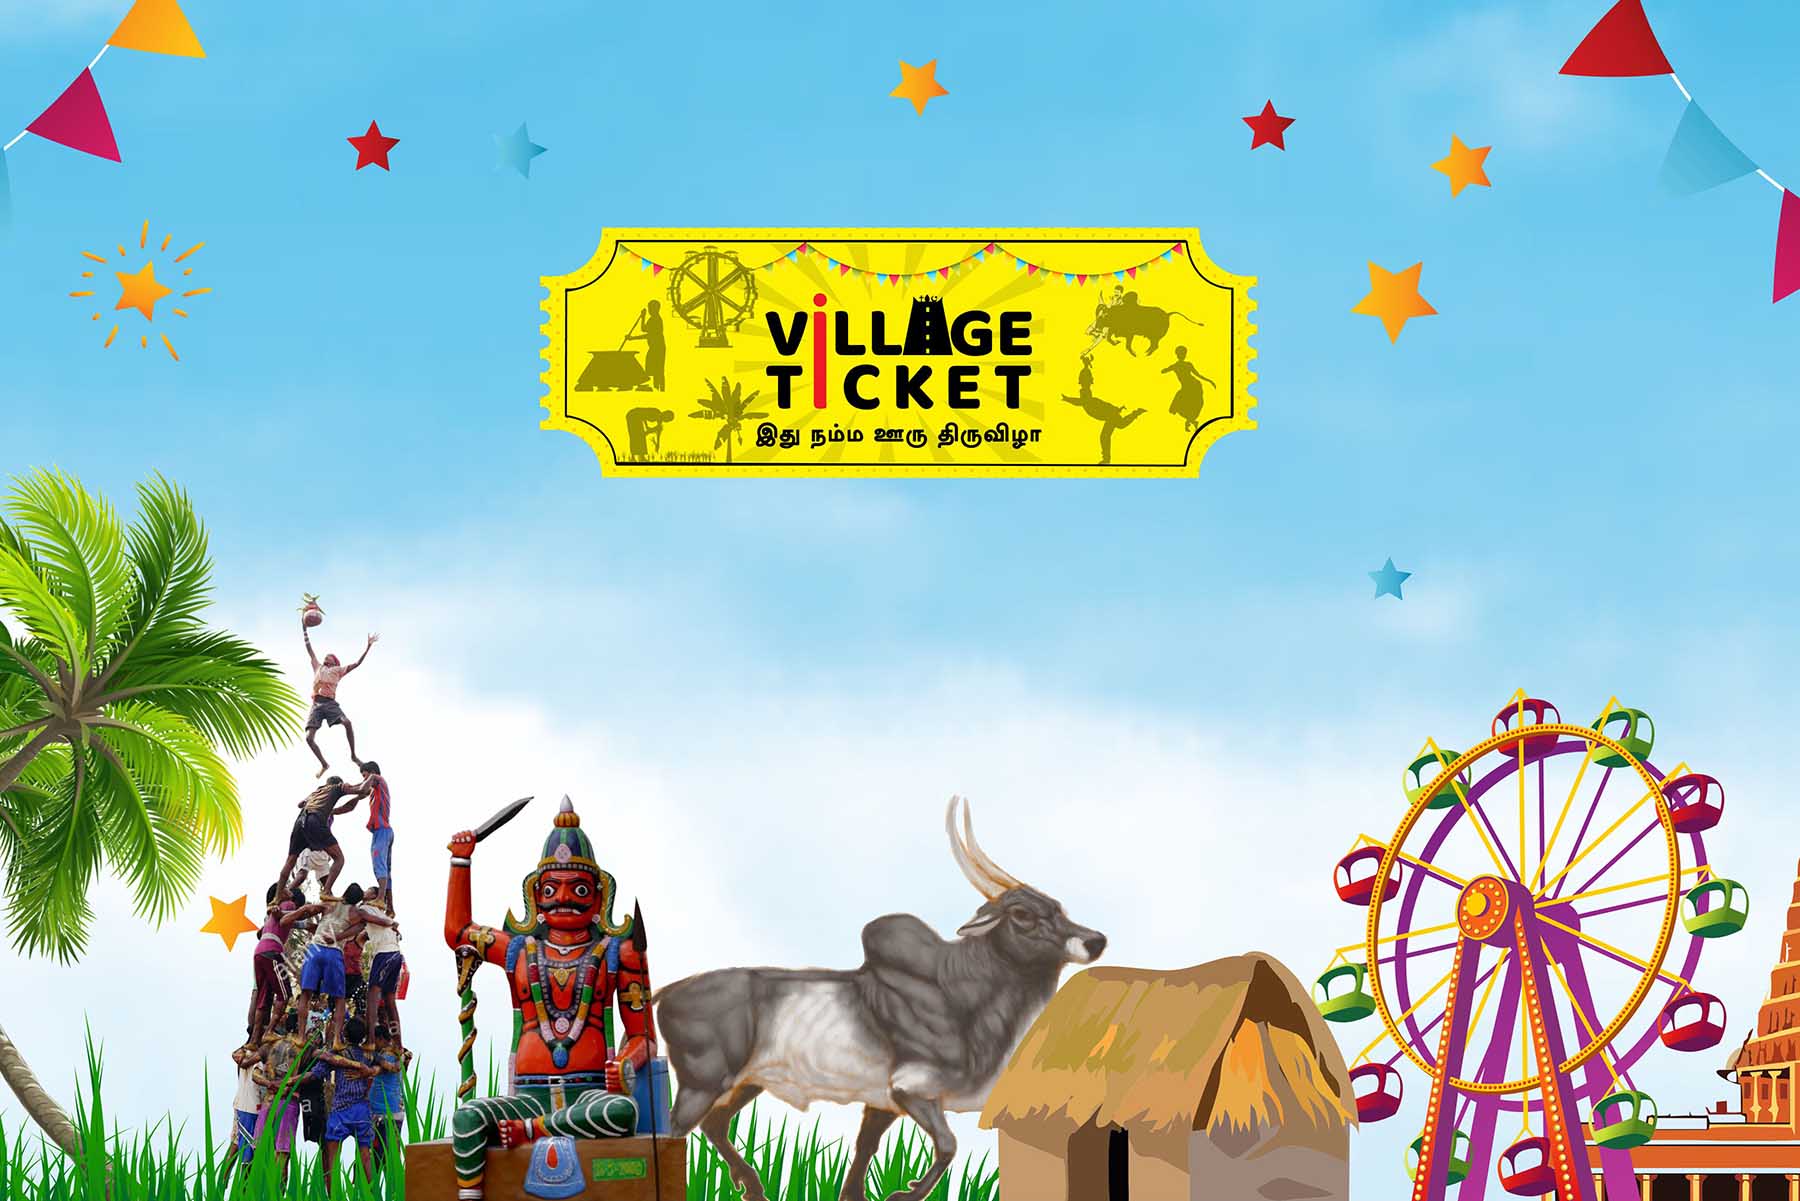 Edition 1 – Village Ticket